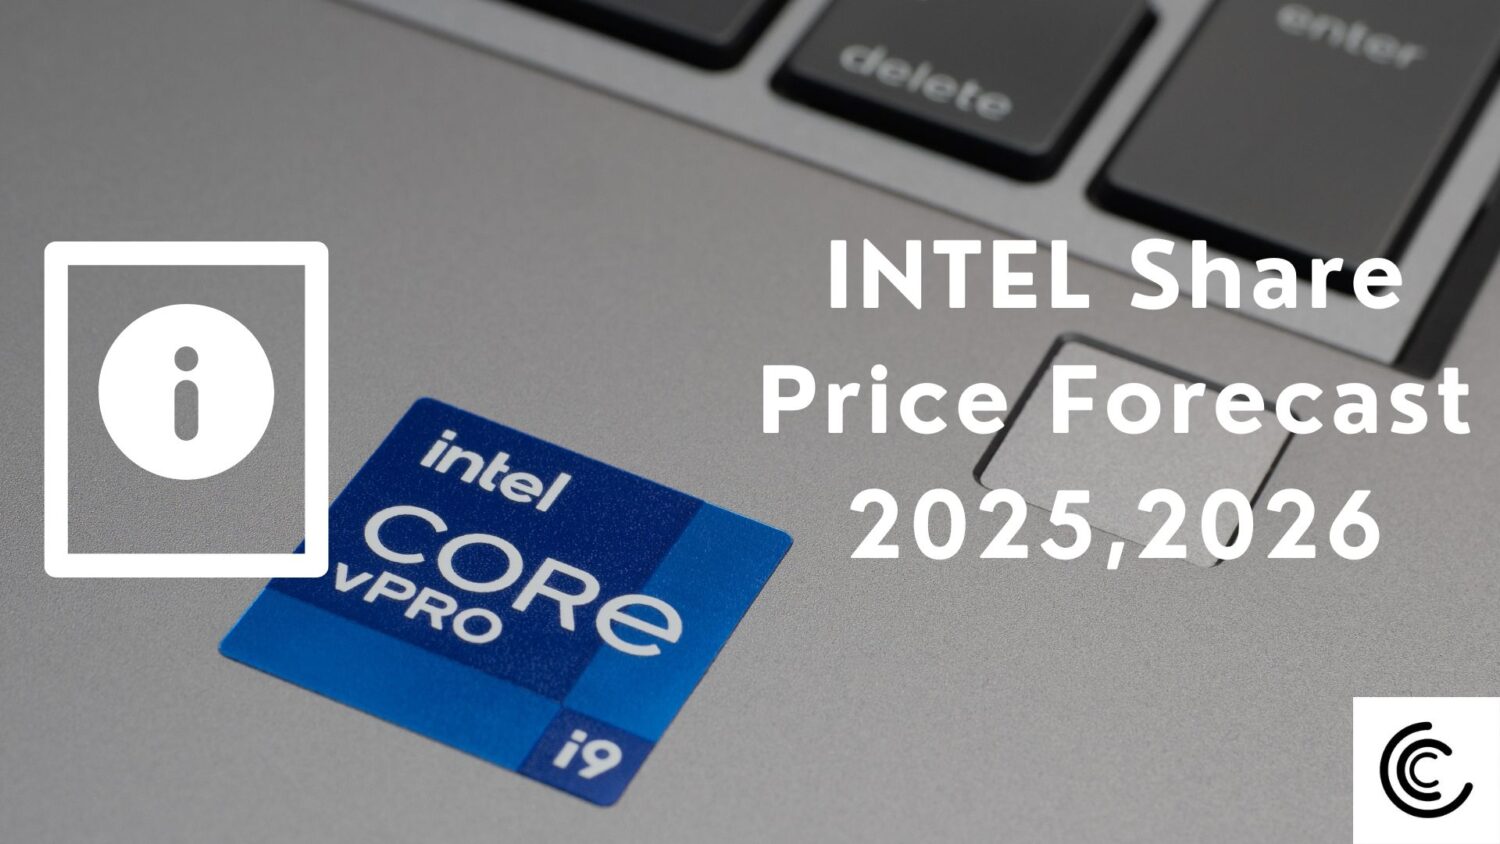 Intel Stock Price Prediction 2025: Intel Share Price Forecast 2025,2026